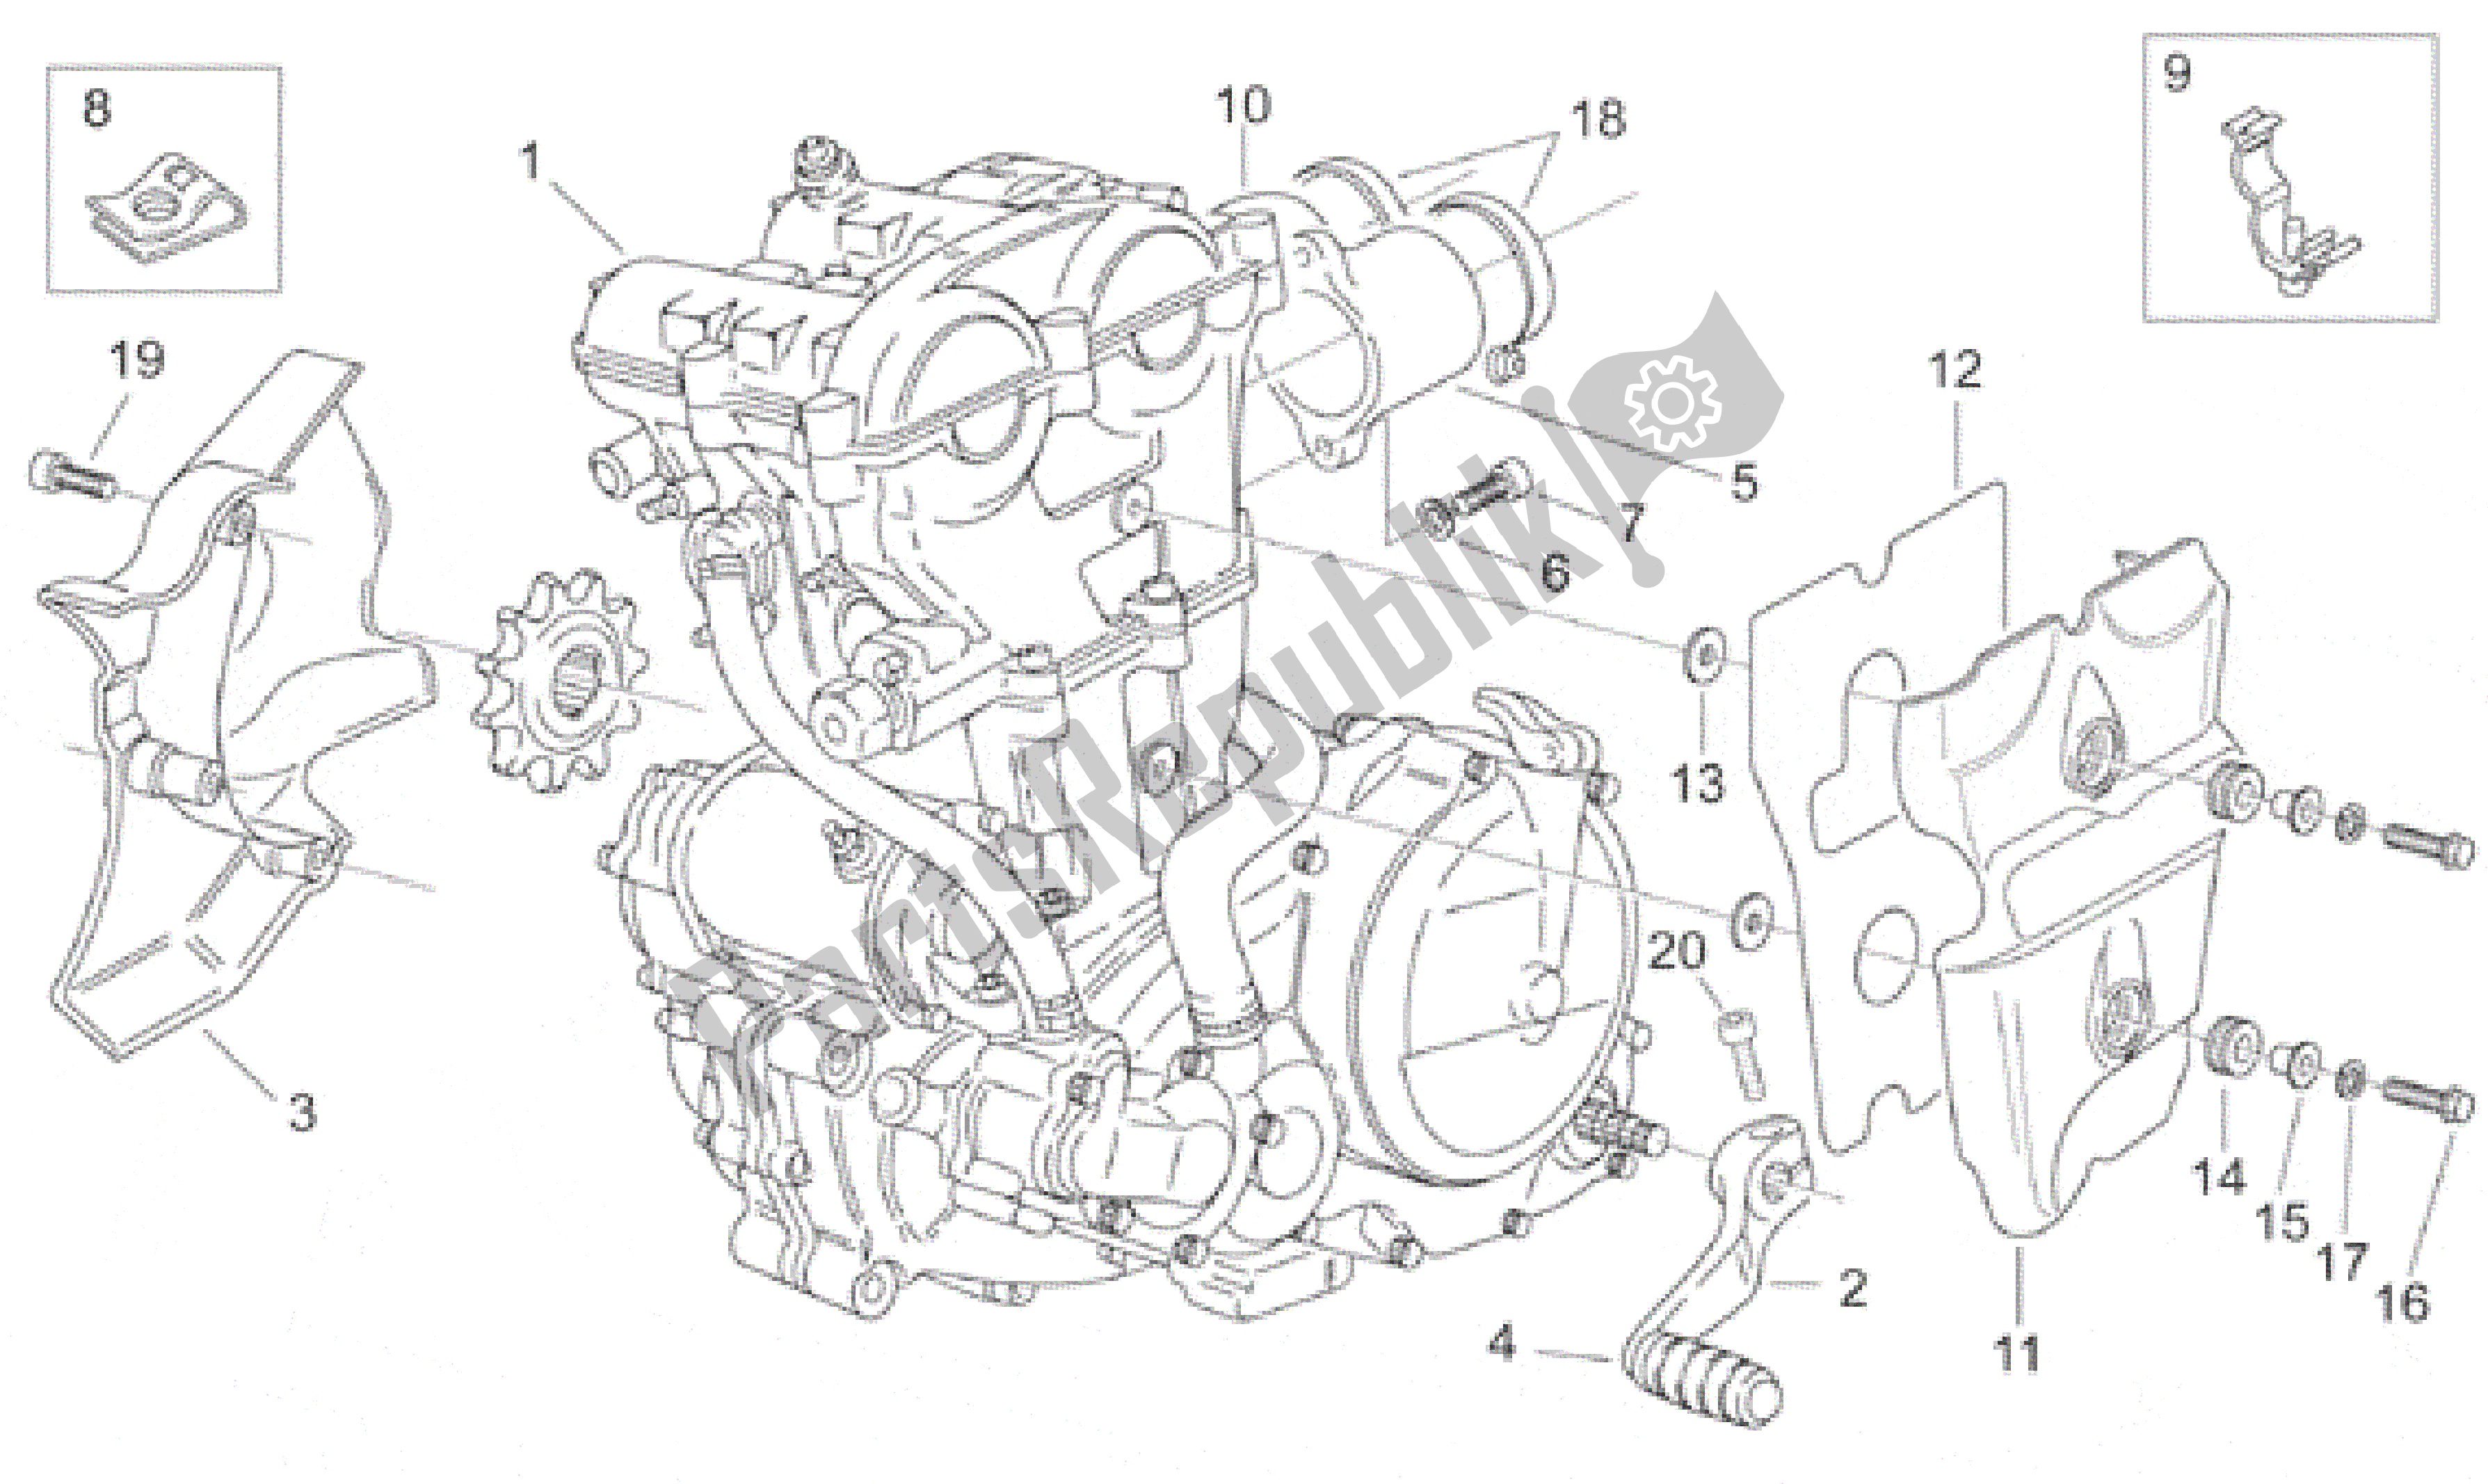 All parts for the Engine of the Aprilia Pegaso 650 1997 - 2000